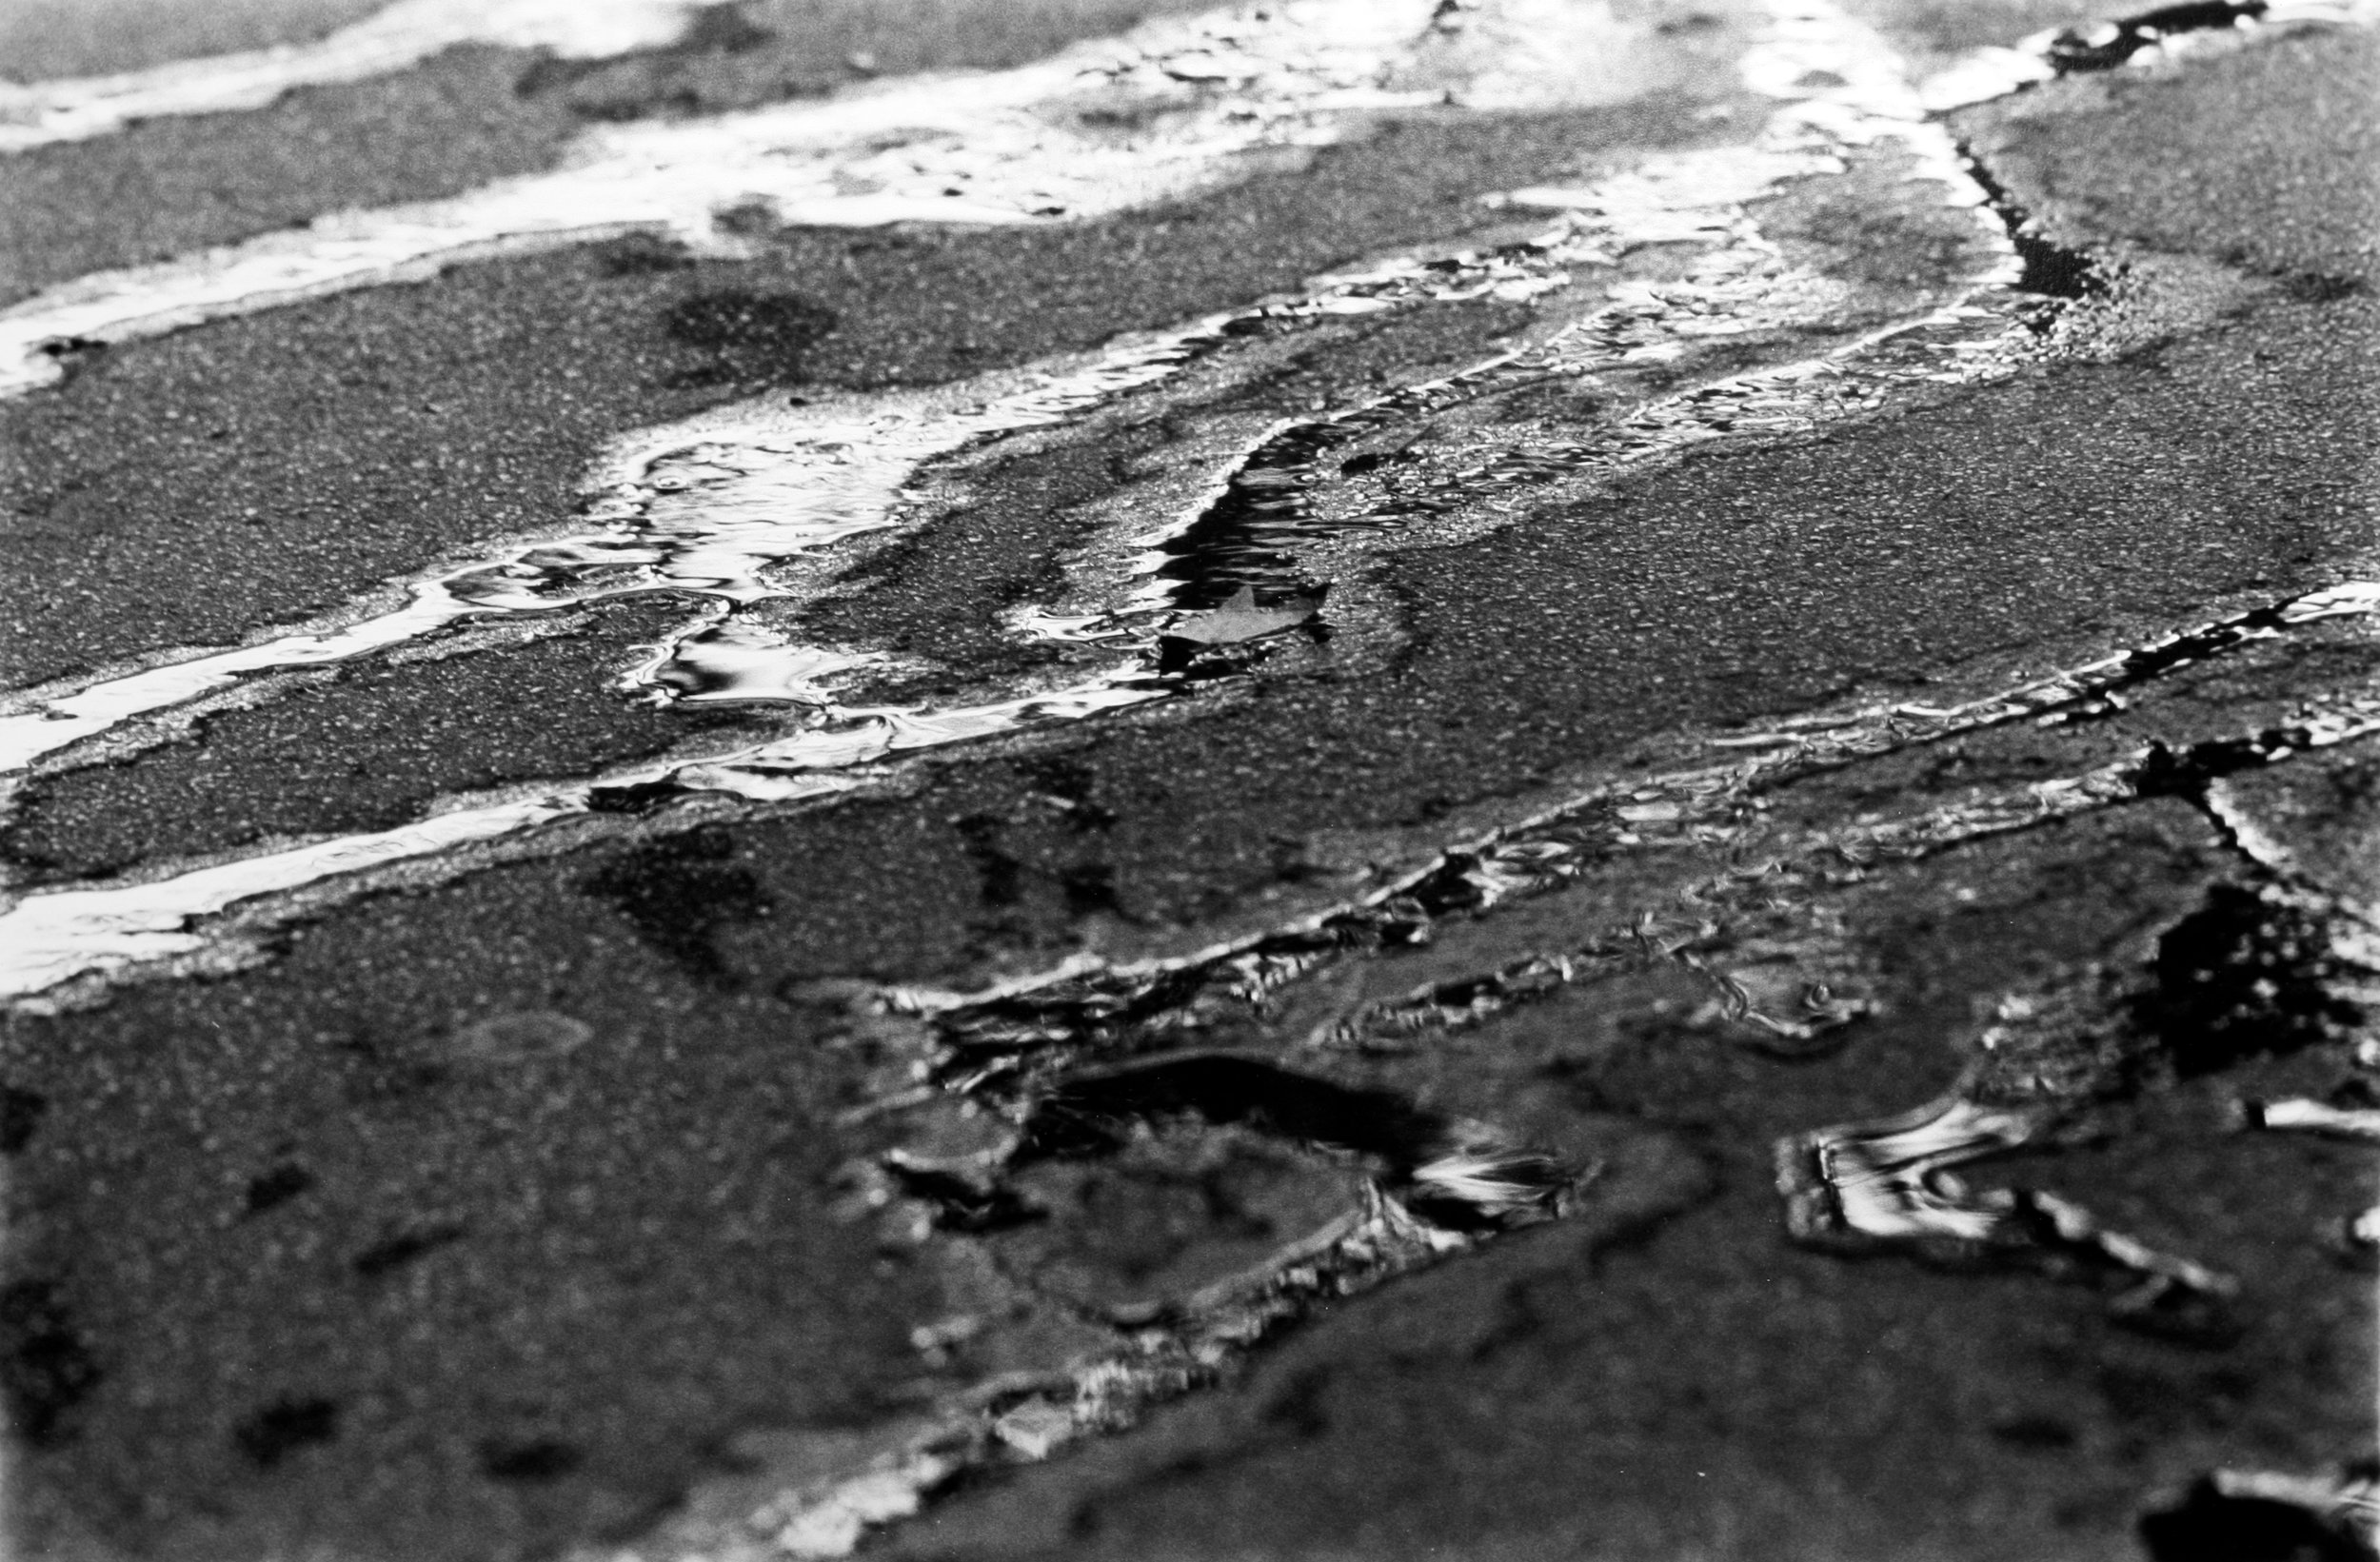 Water on asphalt